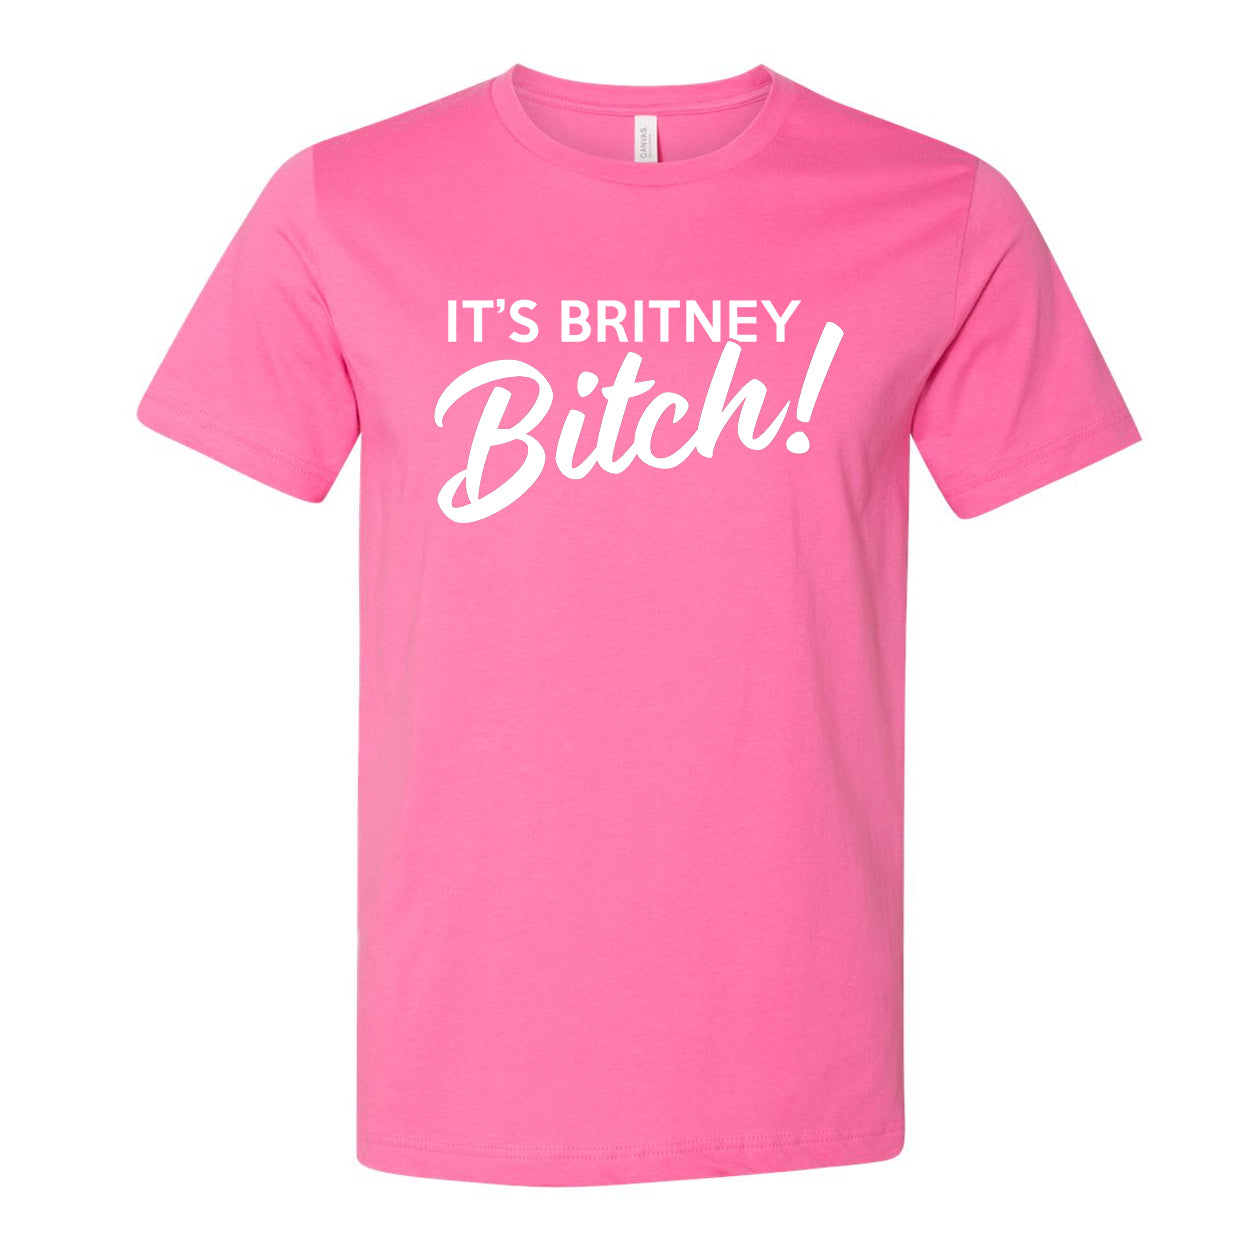 It's Britney Bitch Tshirt - Donkey Tees